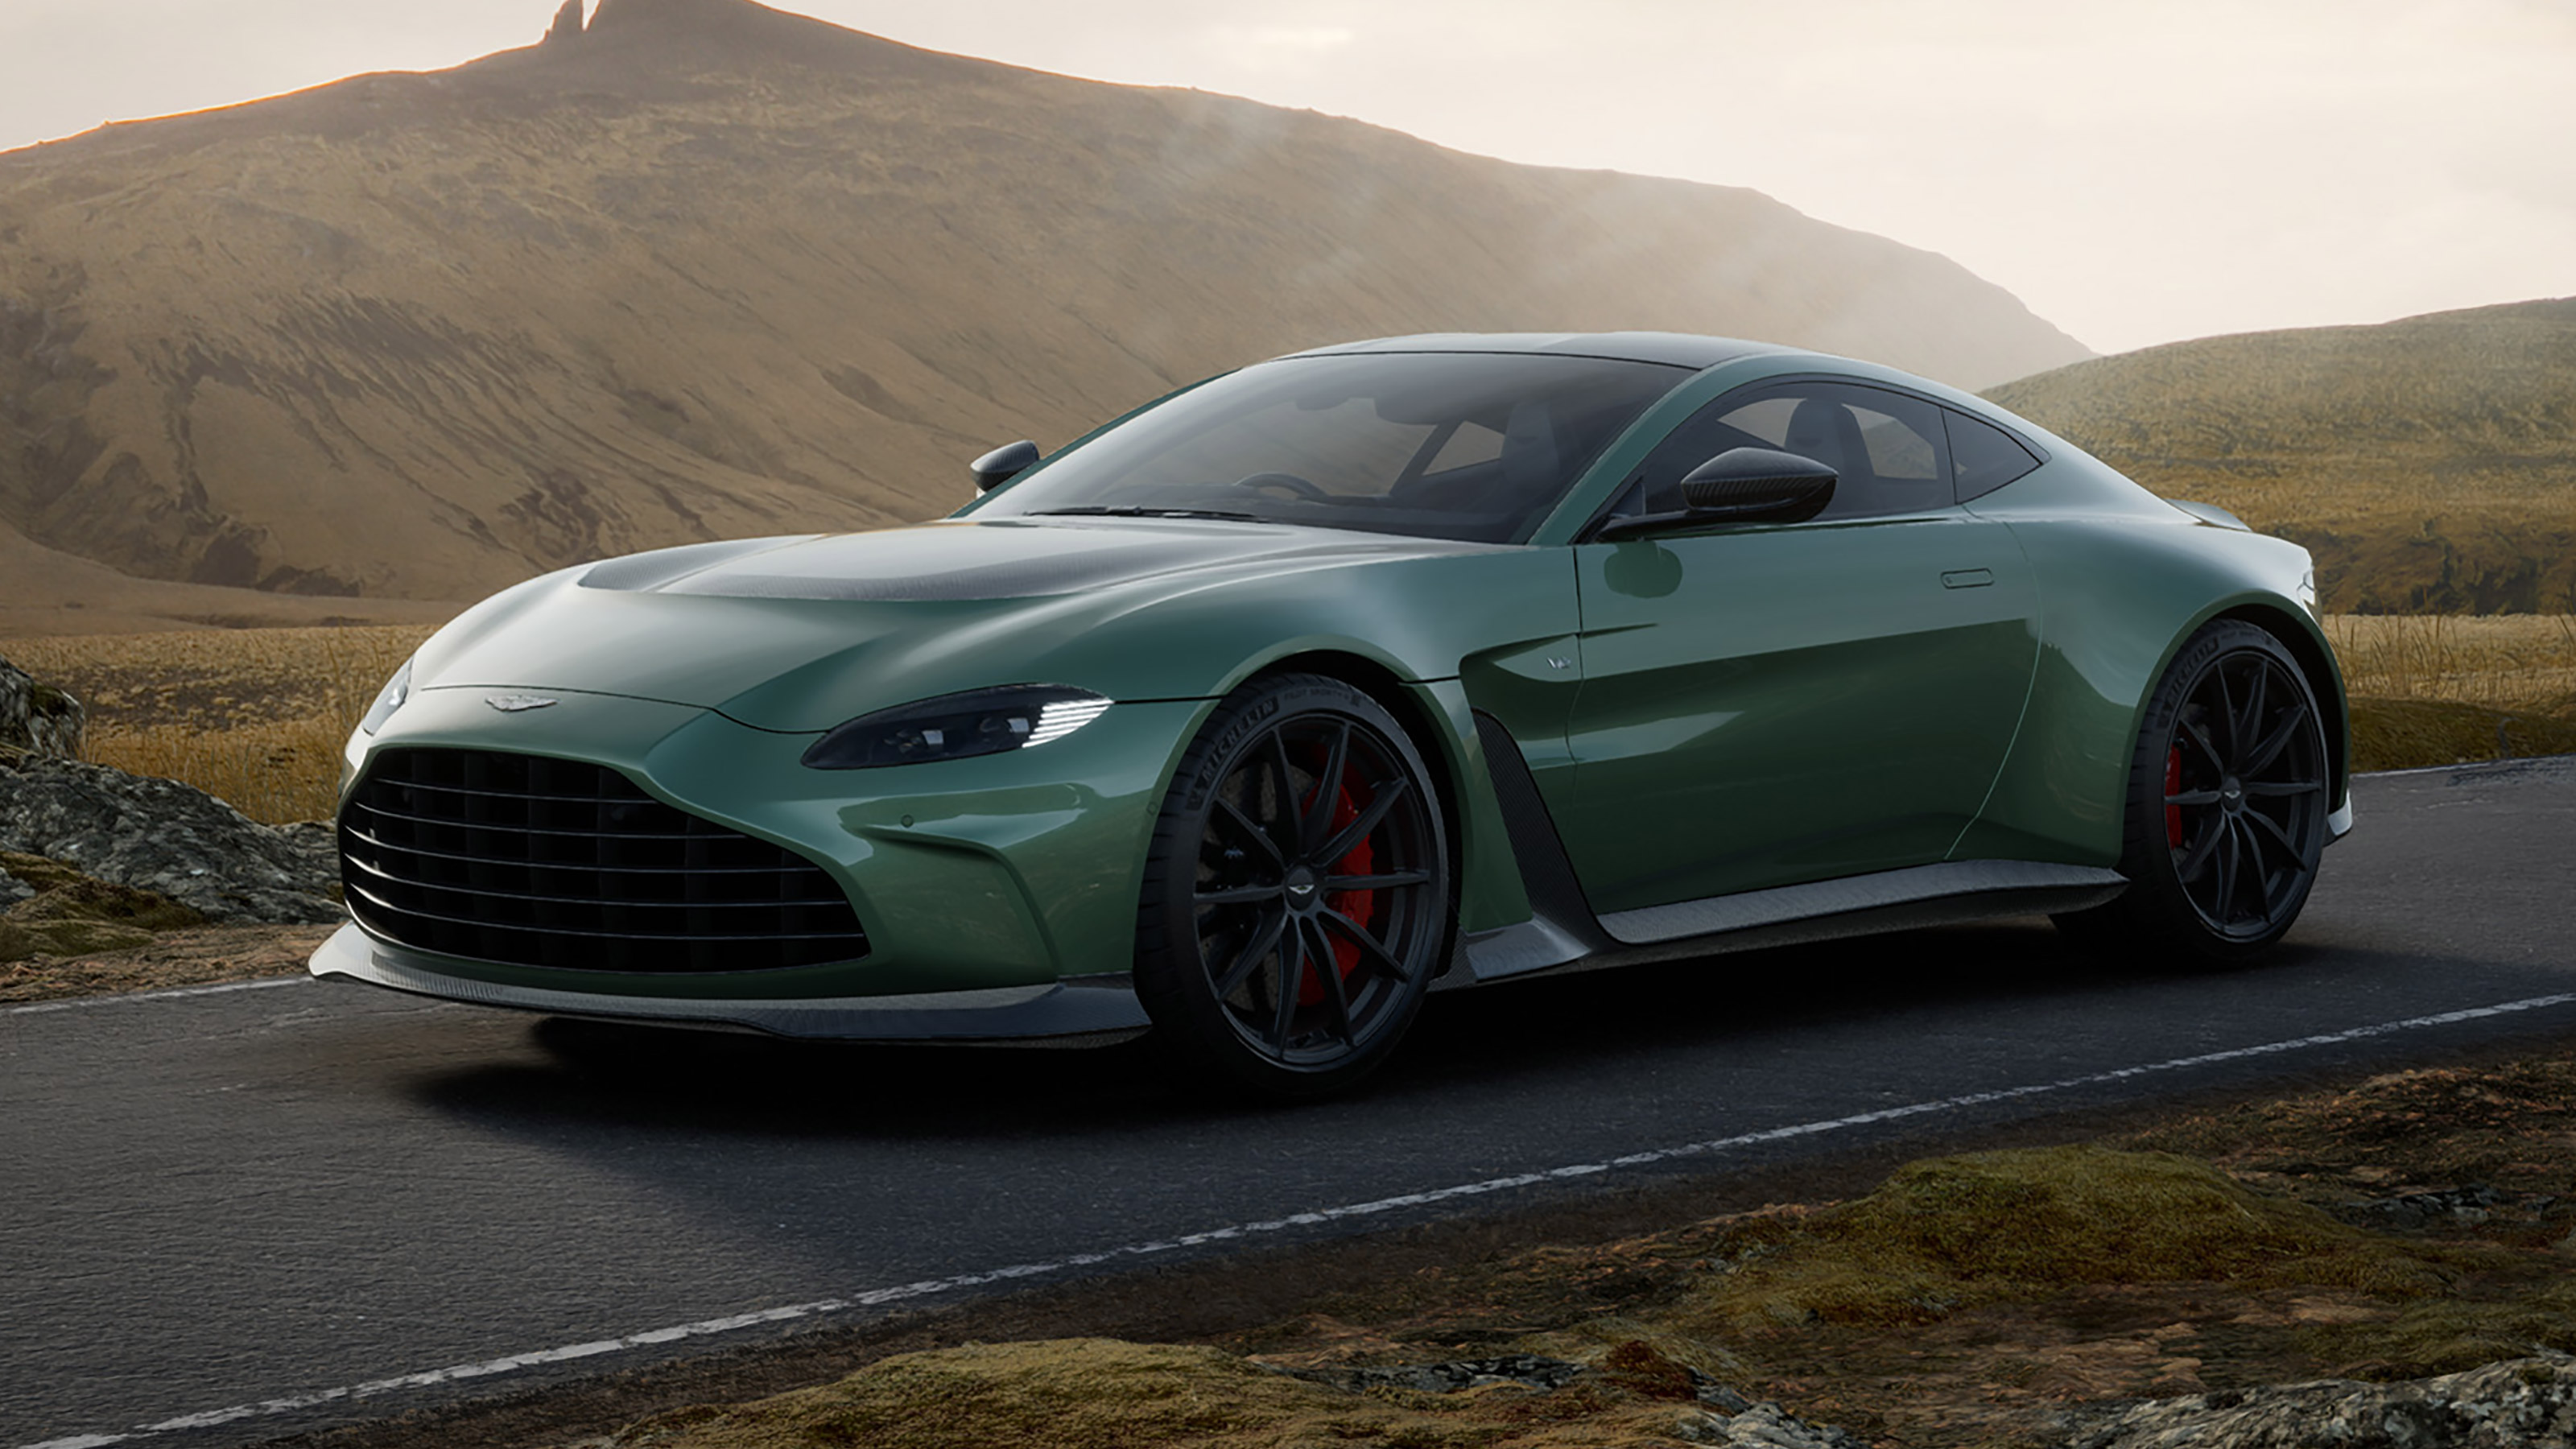 Limited Run Aston Martin V12 Vantage Revealed